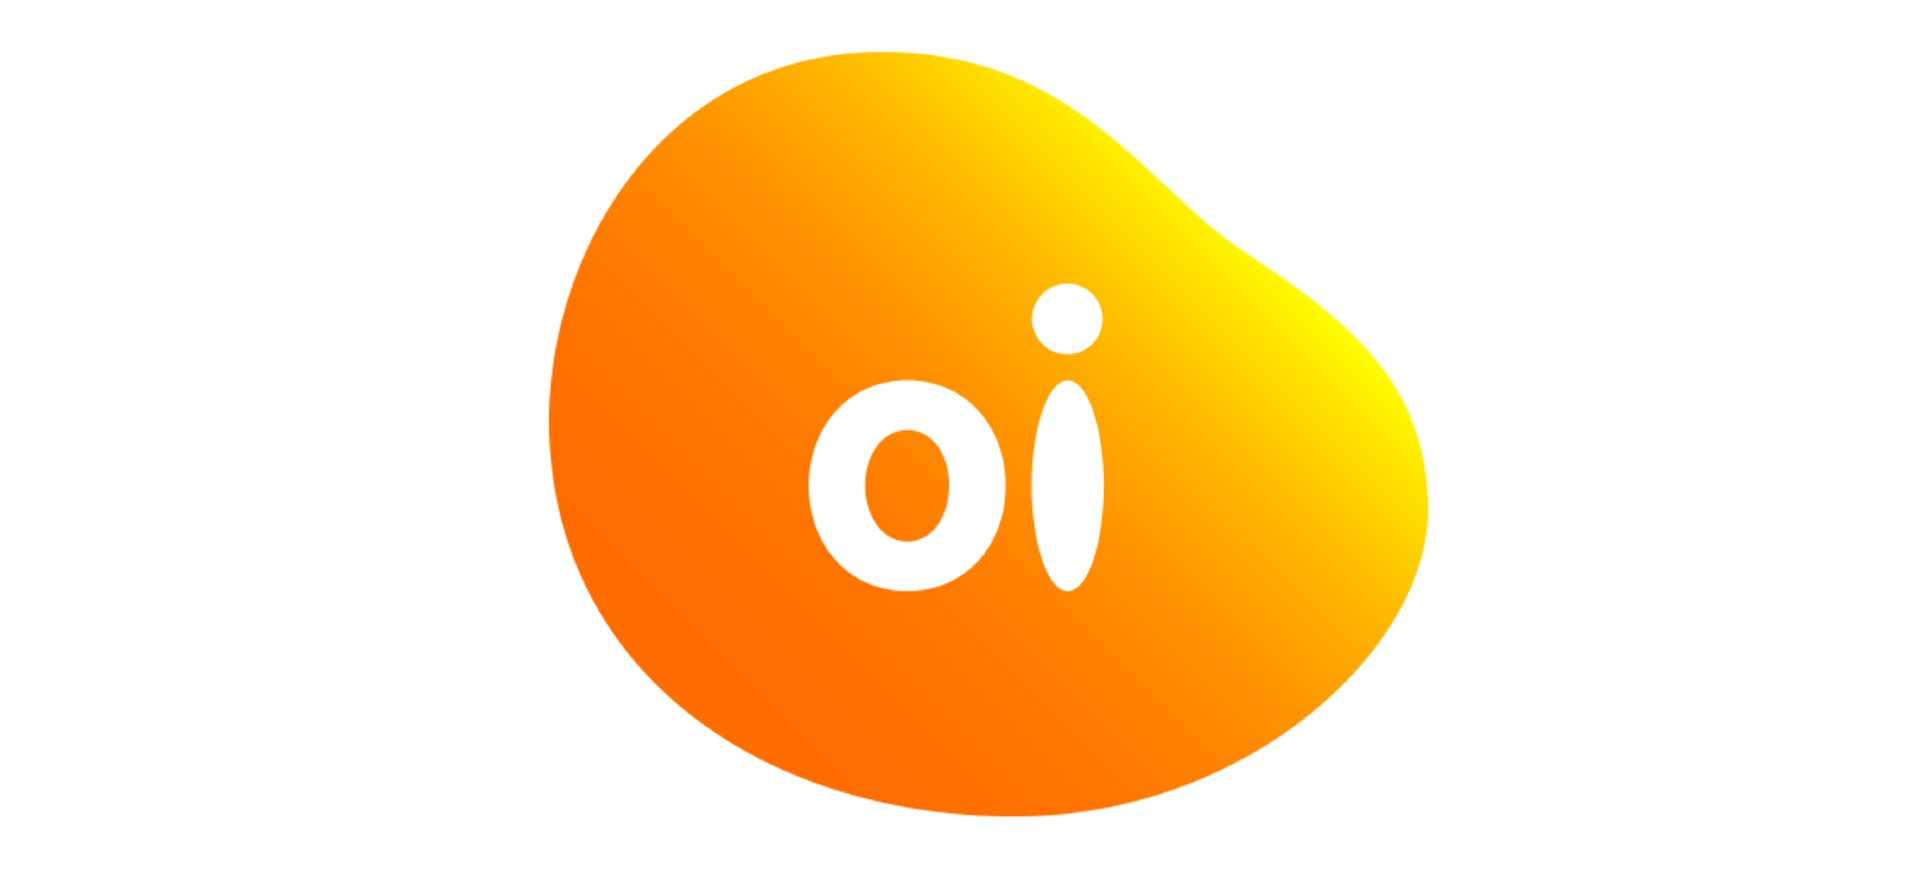 Logotipo da Oi, empresa de telecom brasileira